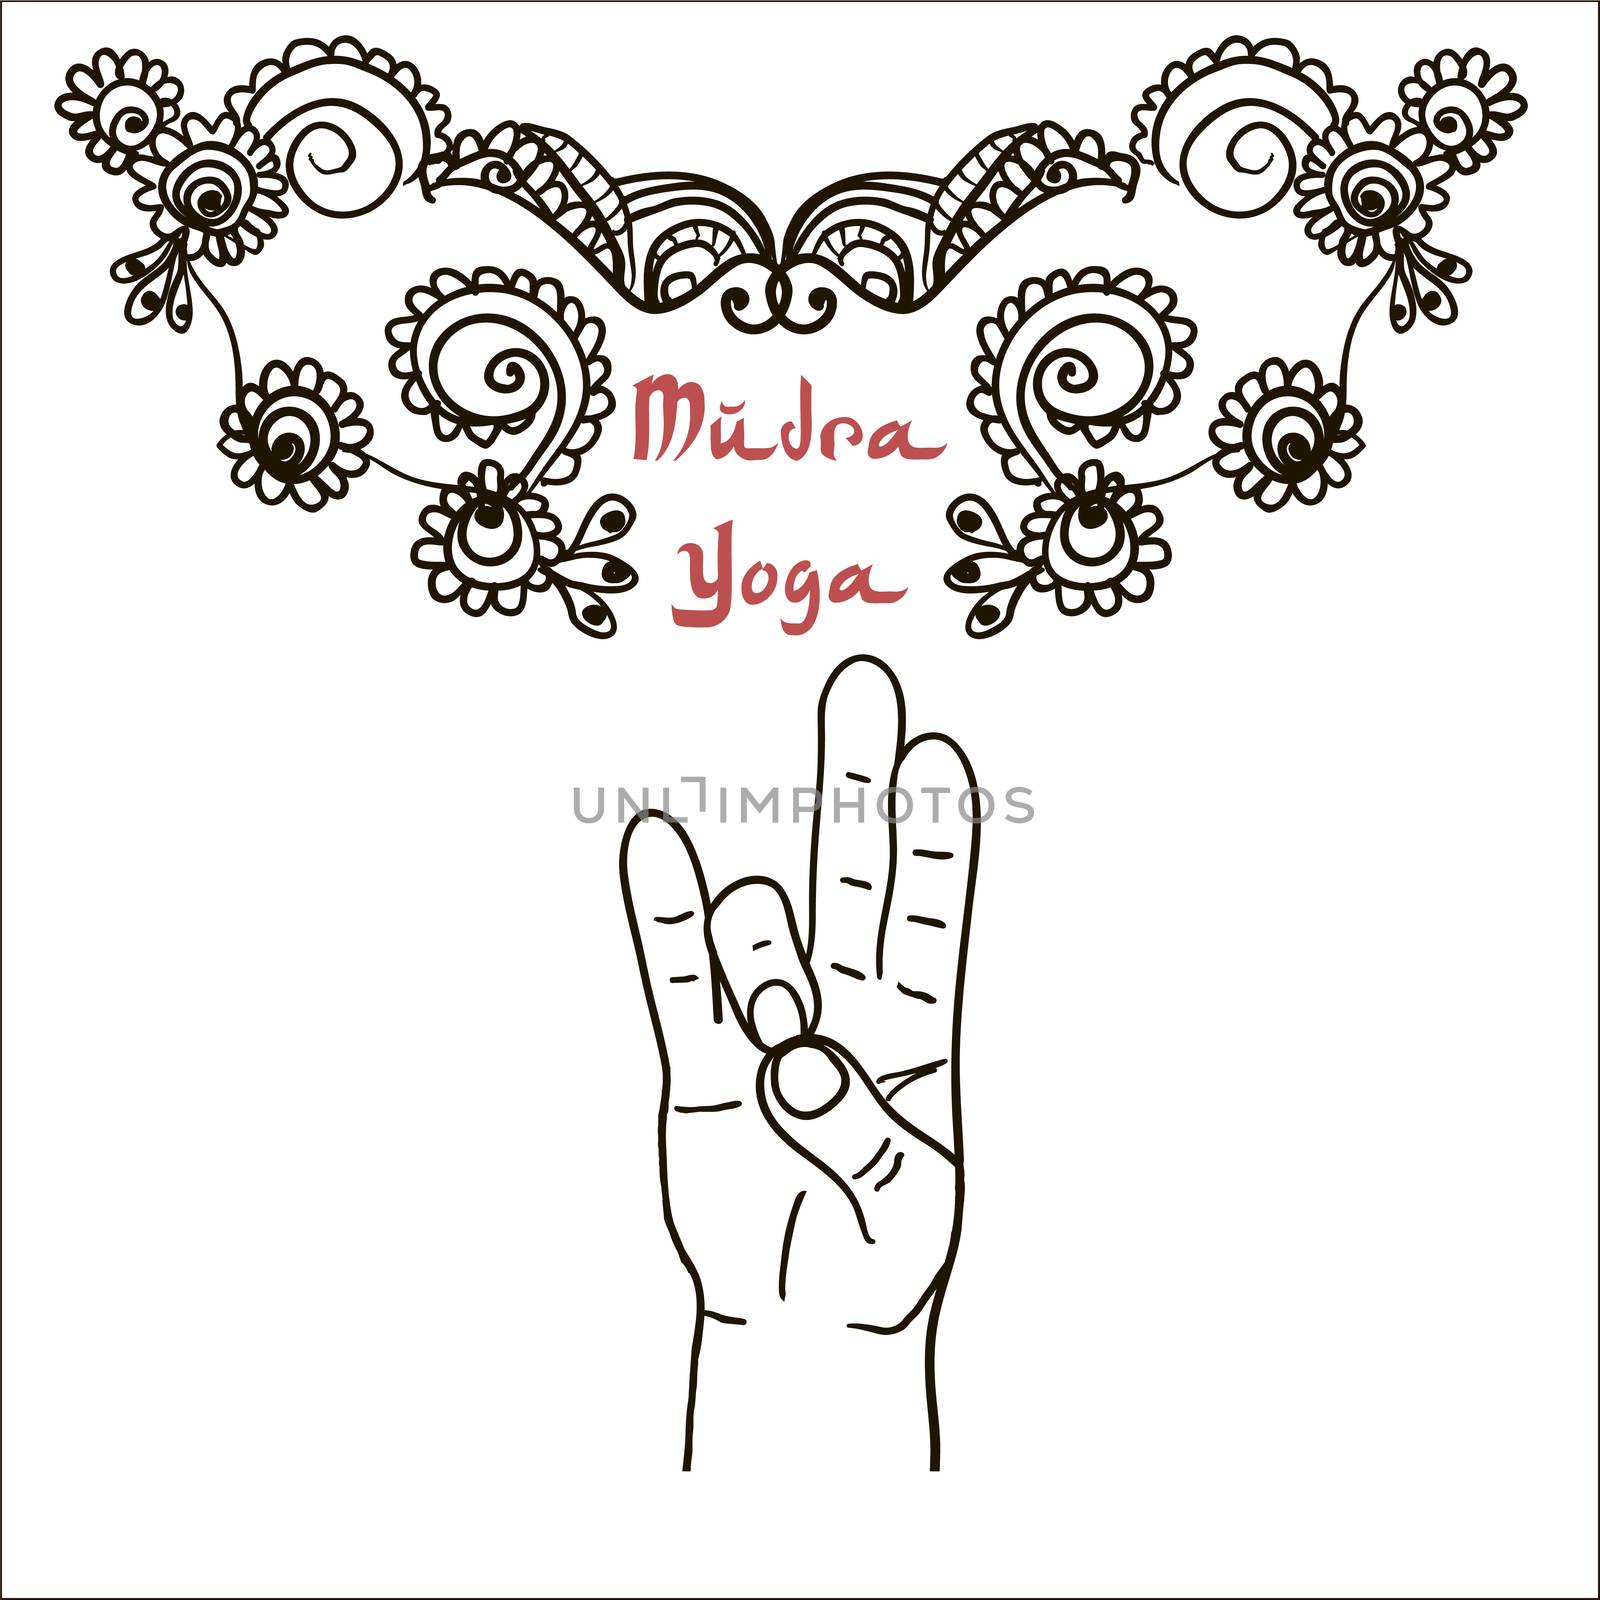 Element yoga Prithivi mudra hands by Rasveta